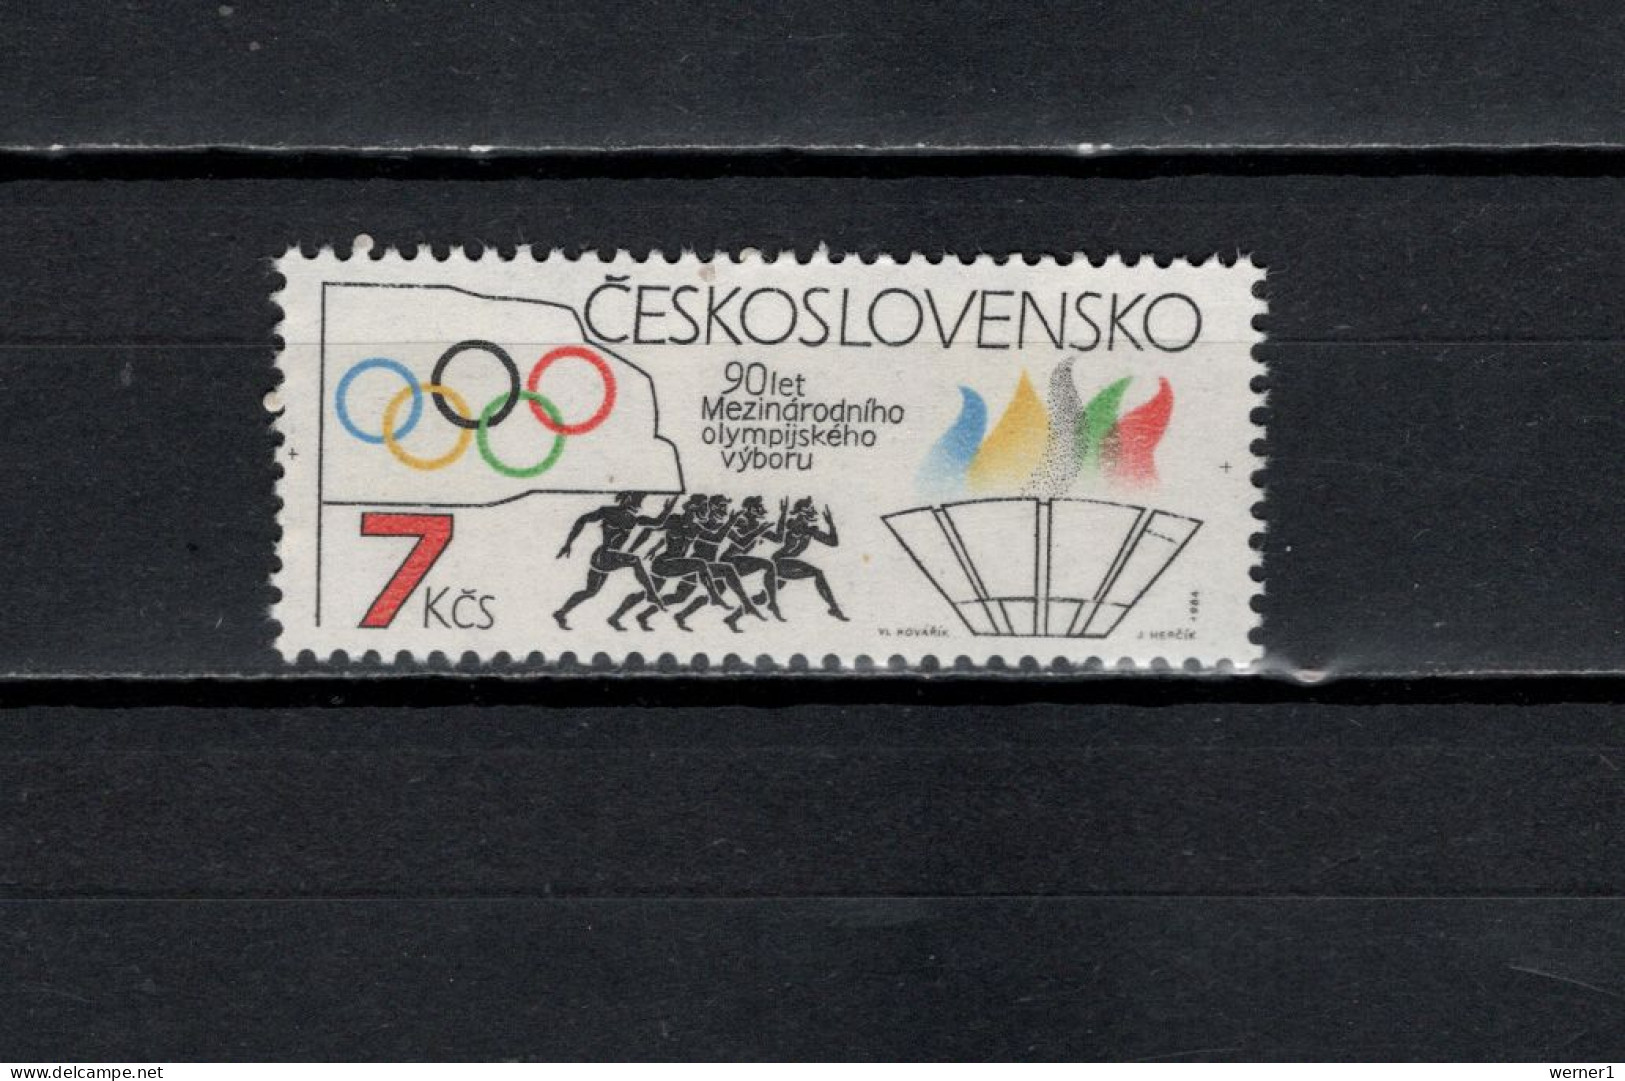 Czechoslovakia 1984 Olympic Games Stamp MNH - Verano 1984: Los Angeles